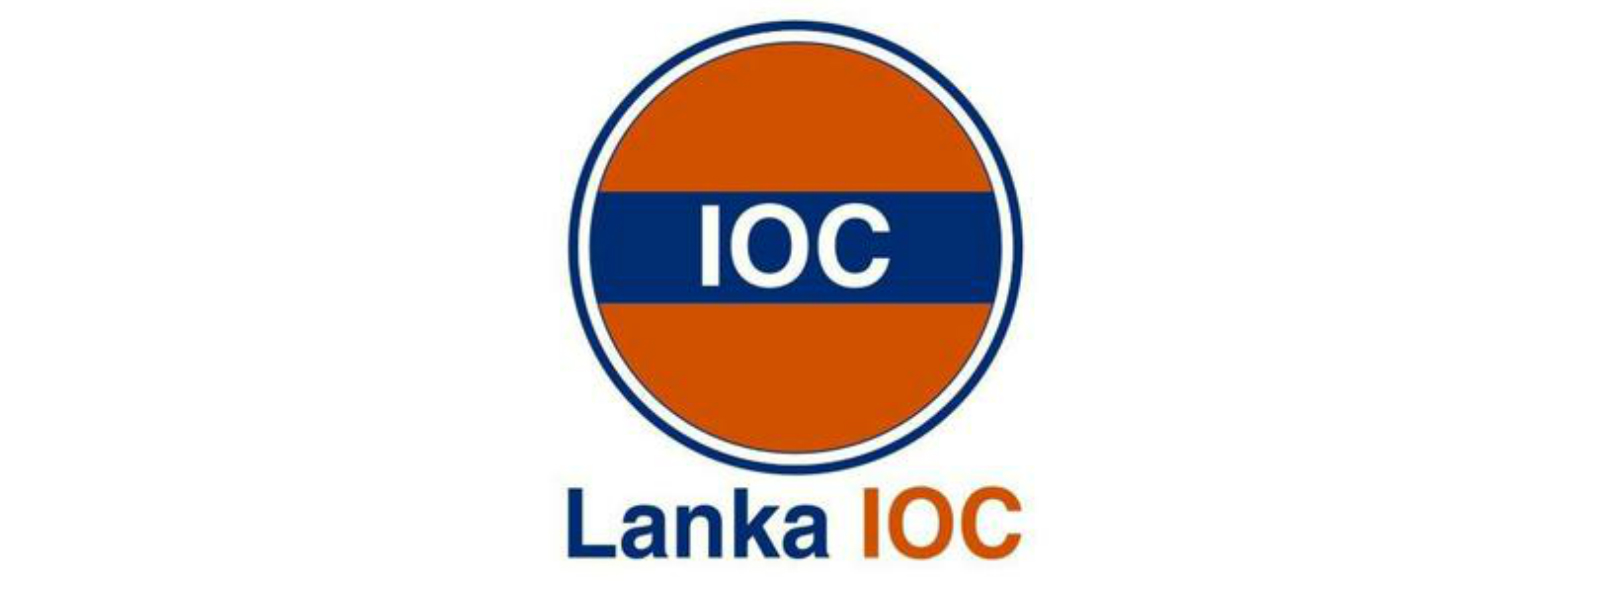 Lanka IOC fuel prices increased